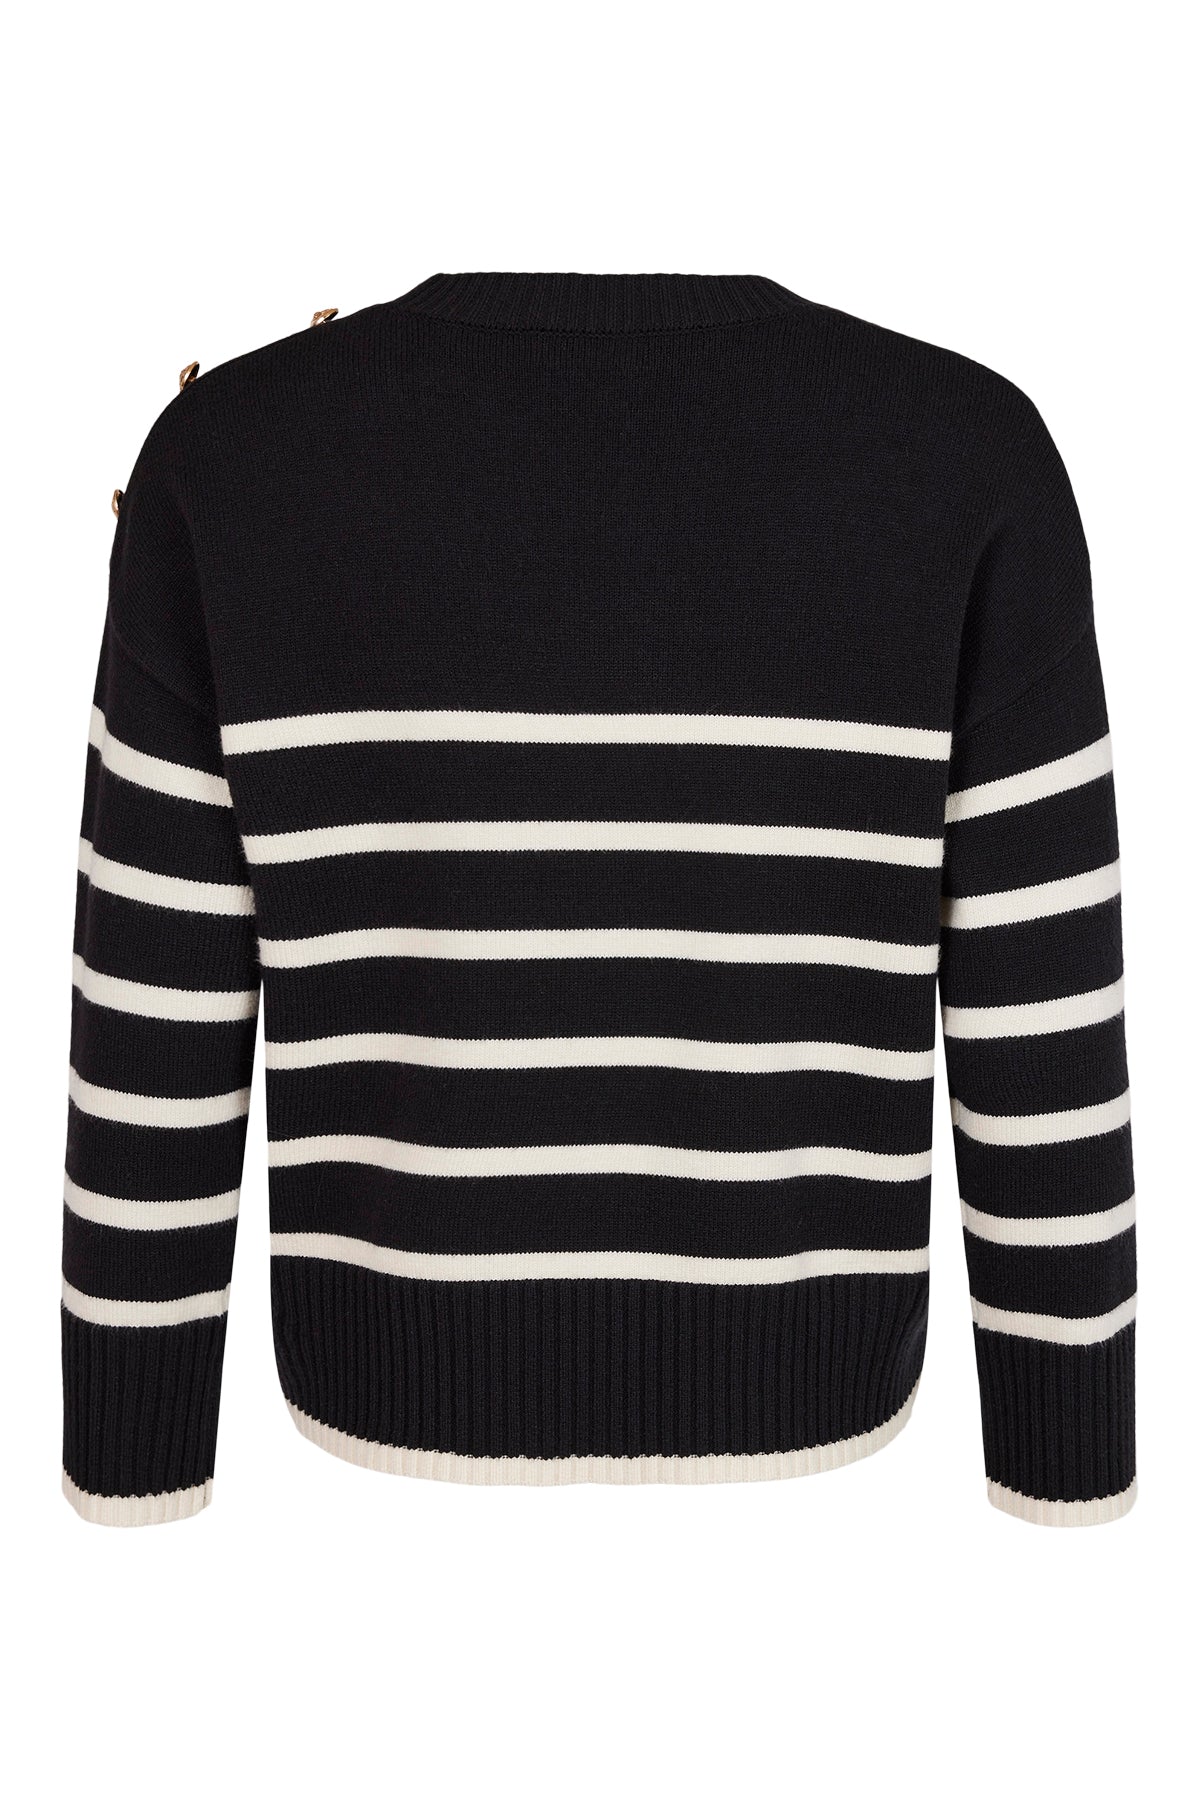 Sunday Black & White Stripe Pullover